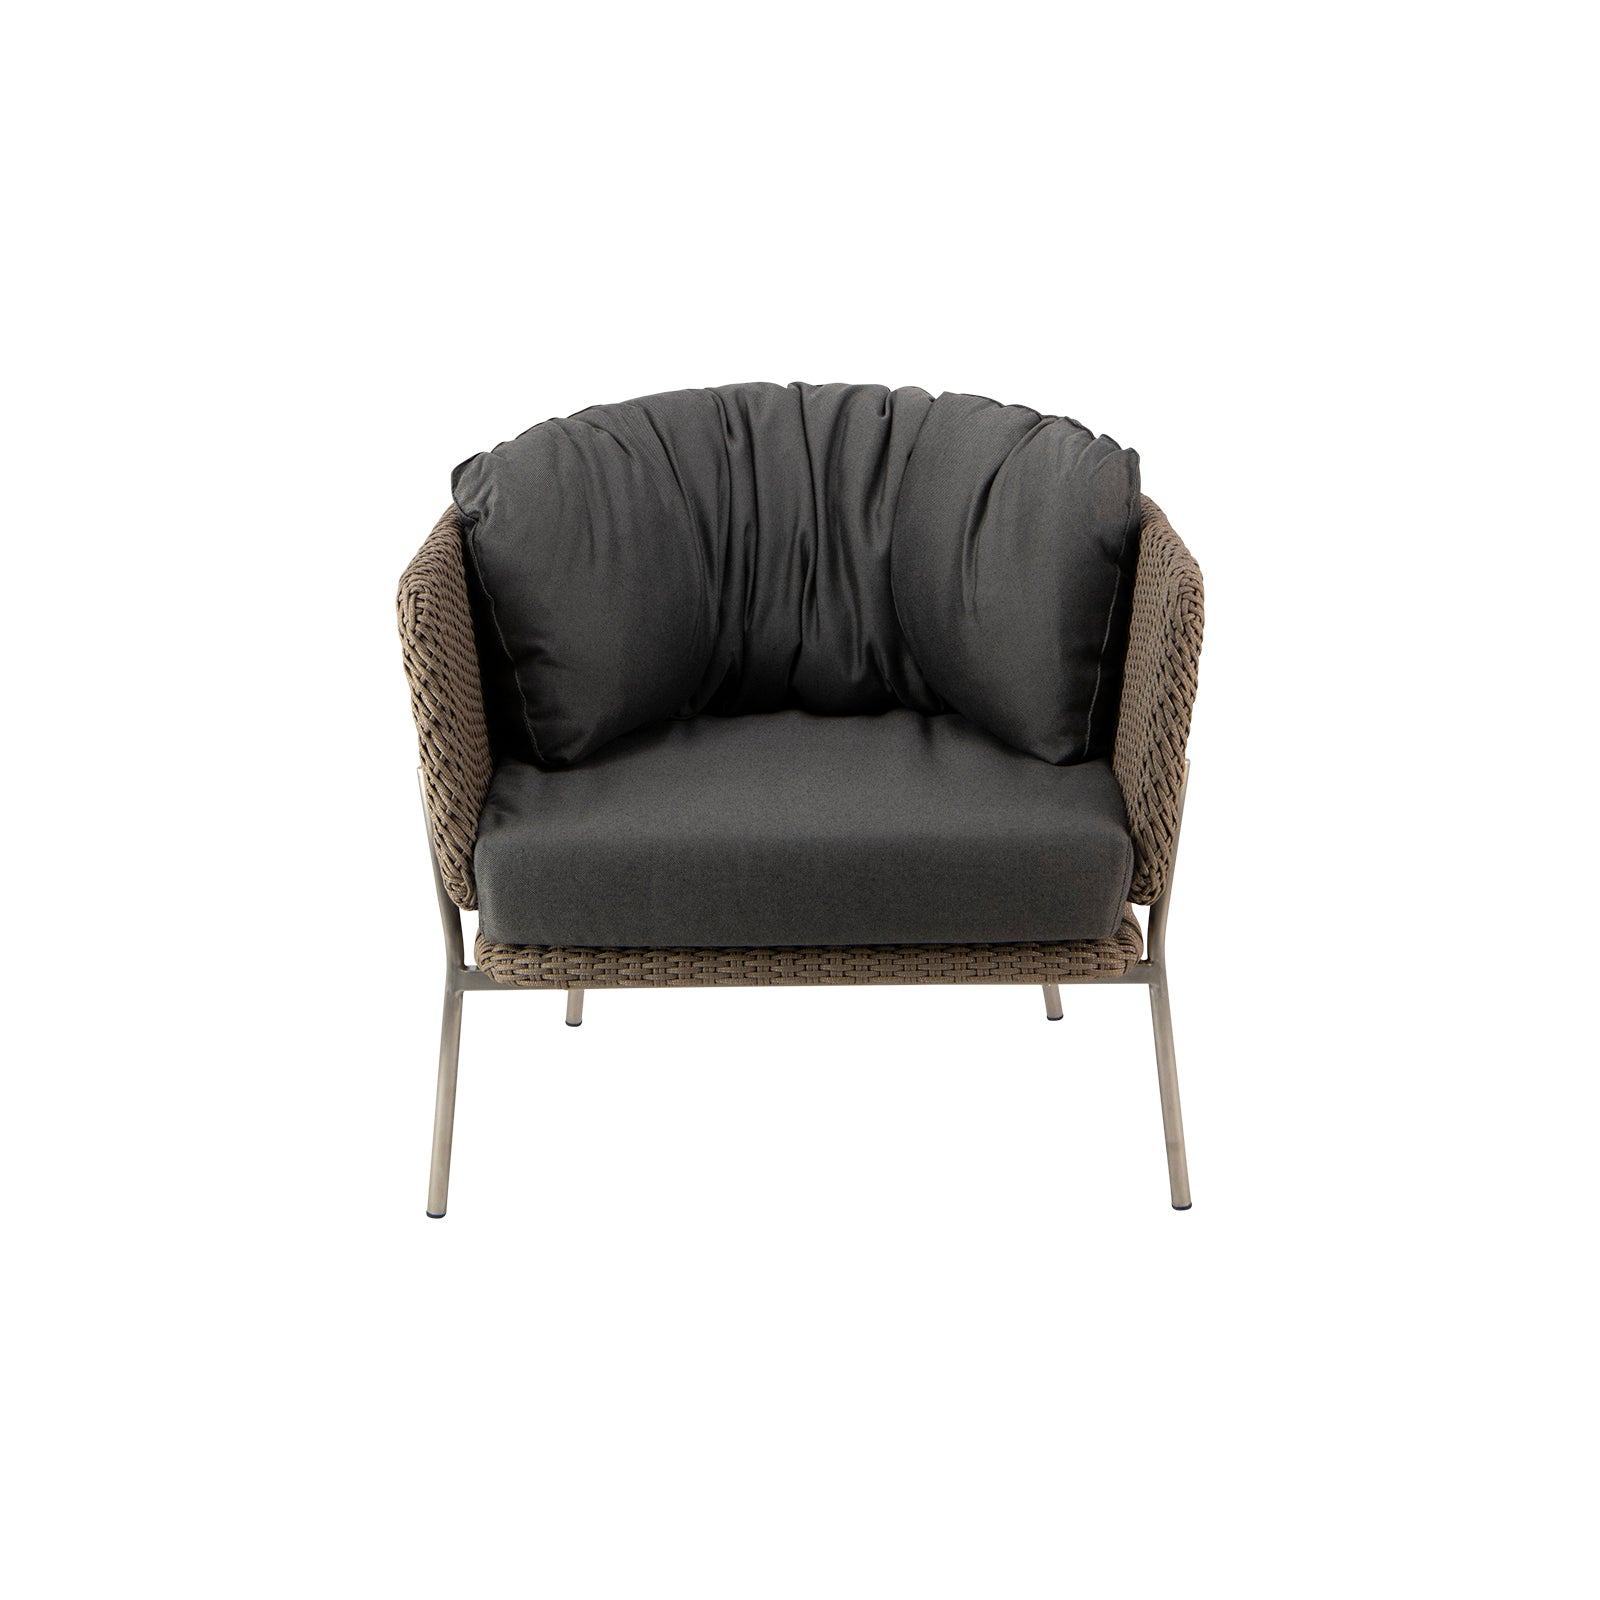 Studio Rope Cyprus Weave Relaxing Chair (Agora® Panama Coal)